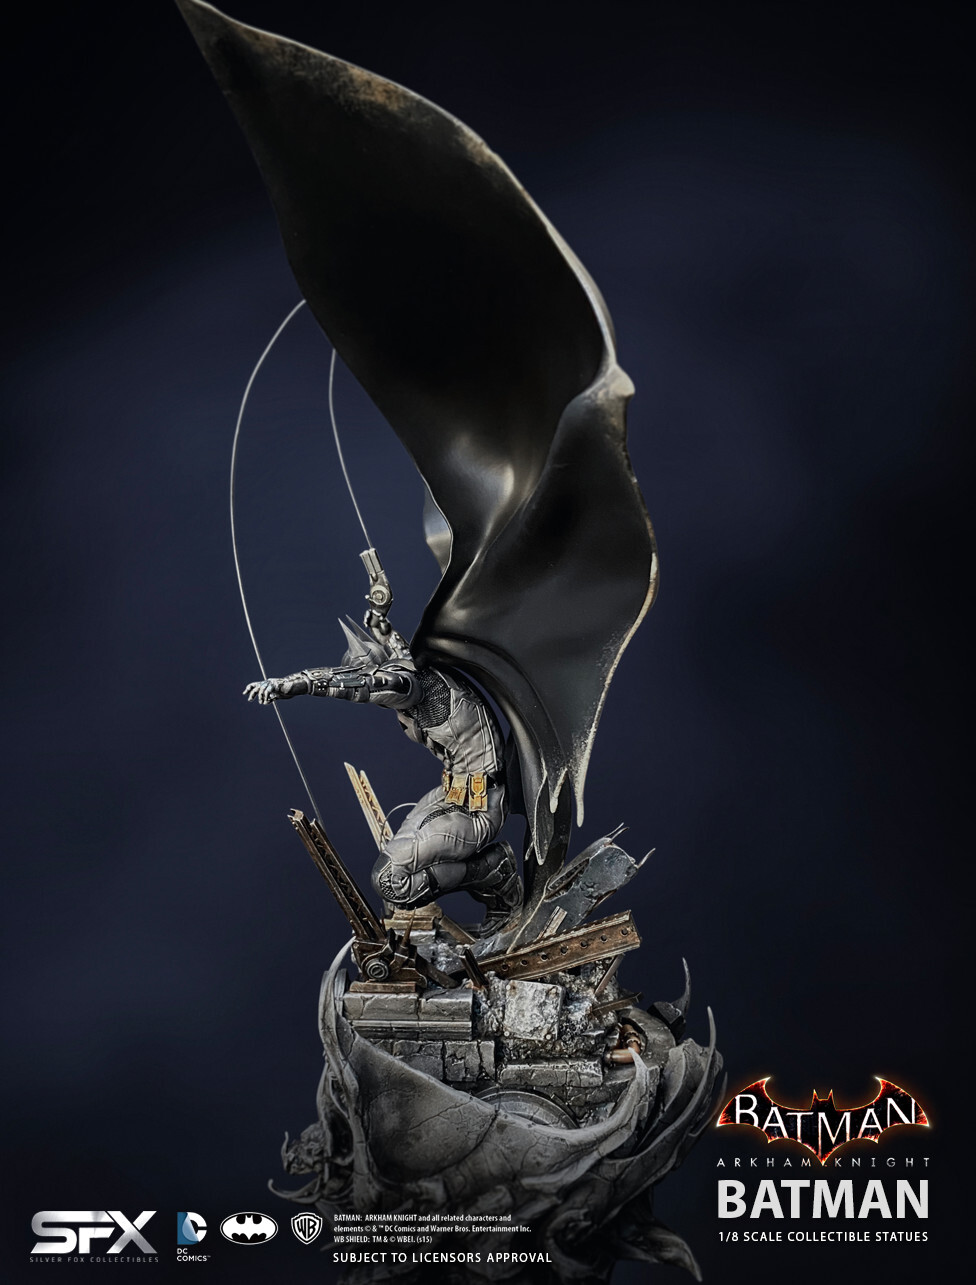 Batman-Arkham Origins Excl Statue - sfxcollectibles